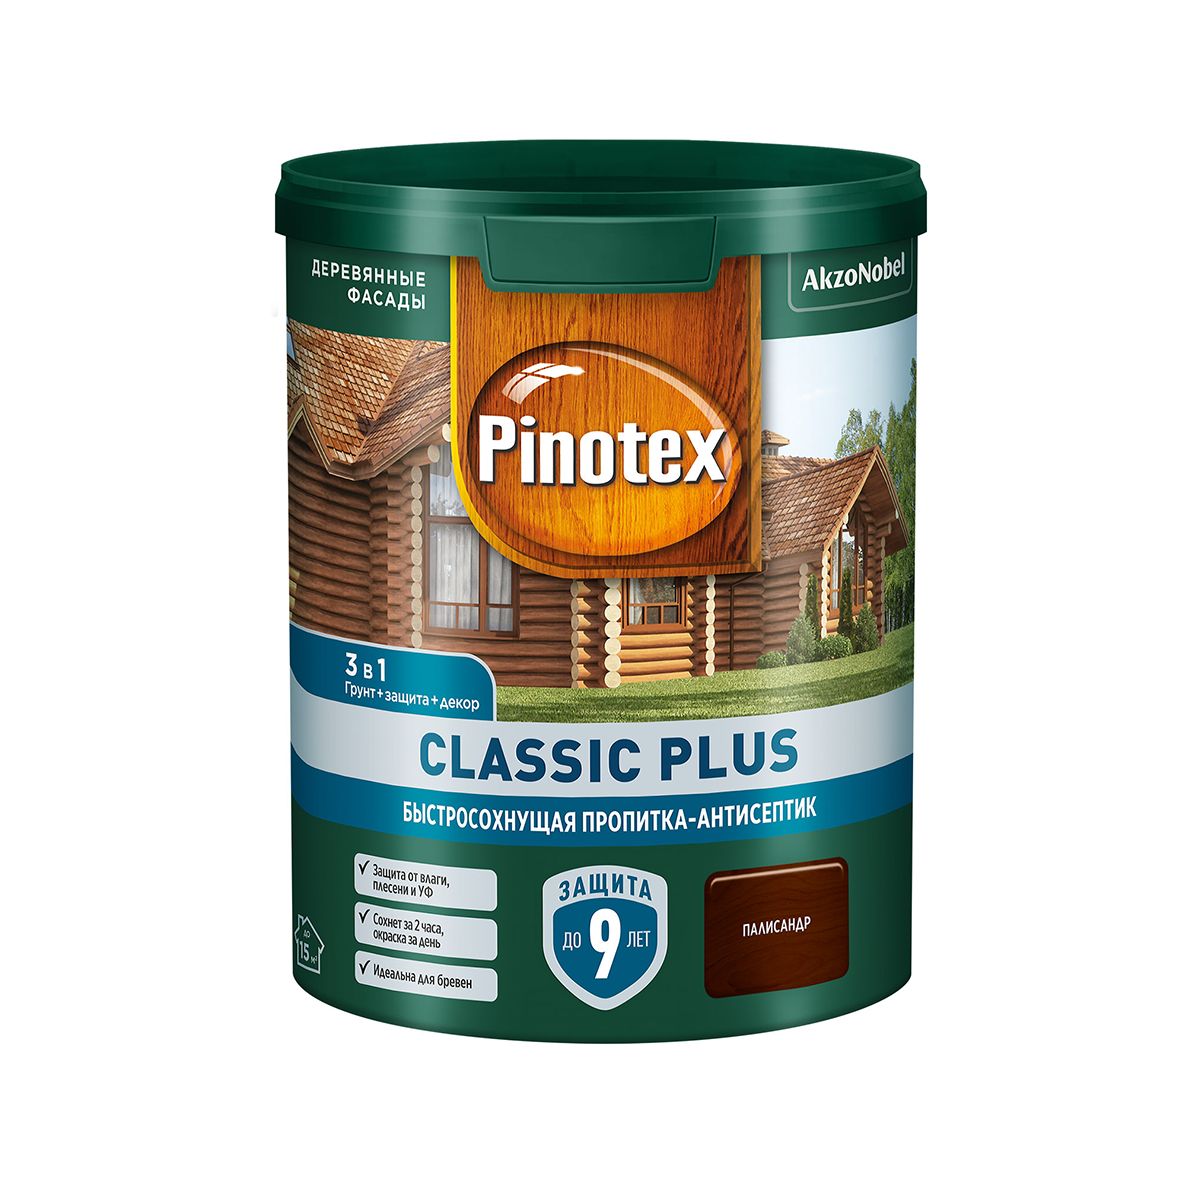 Пропитка-антисептик Pinotex Classic Plus 3 в 1,быстросохнущая, палисандр, 900 мл пропитка антисептик pinotex classic plus 3 в 1 быстросохнущая лиственница 2 5 л